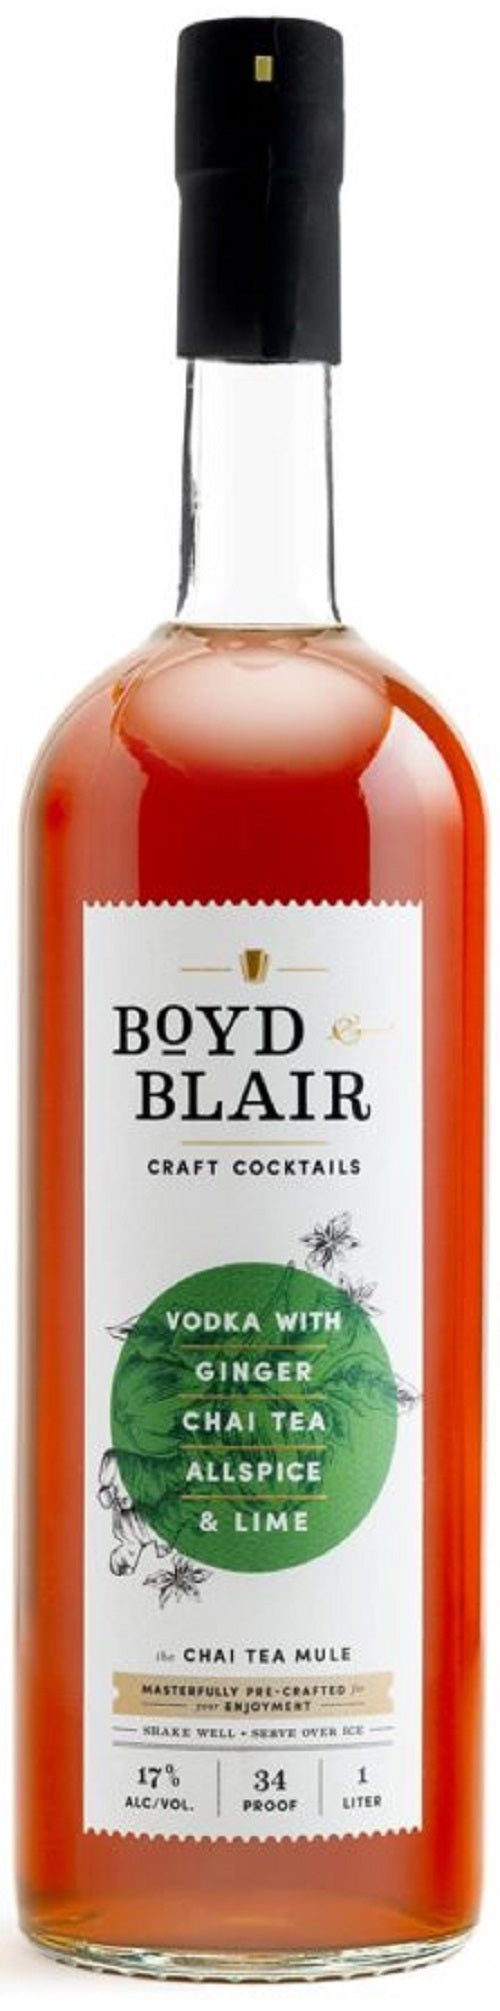 Boyd & Blair Craft Cocktails Vodka Ginger Chai Tea Citrus